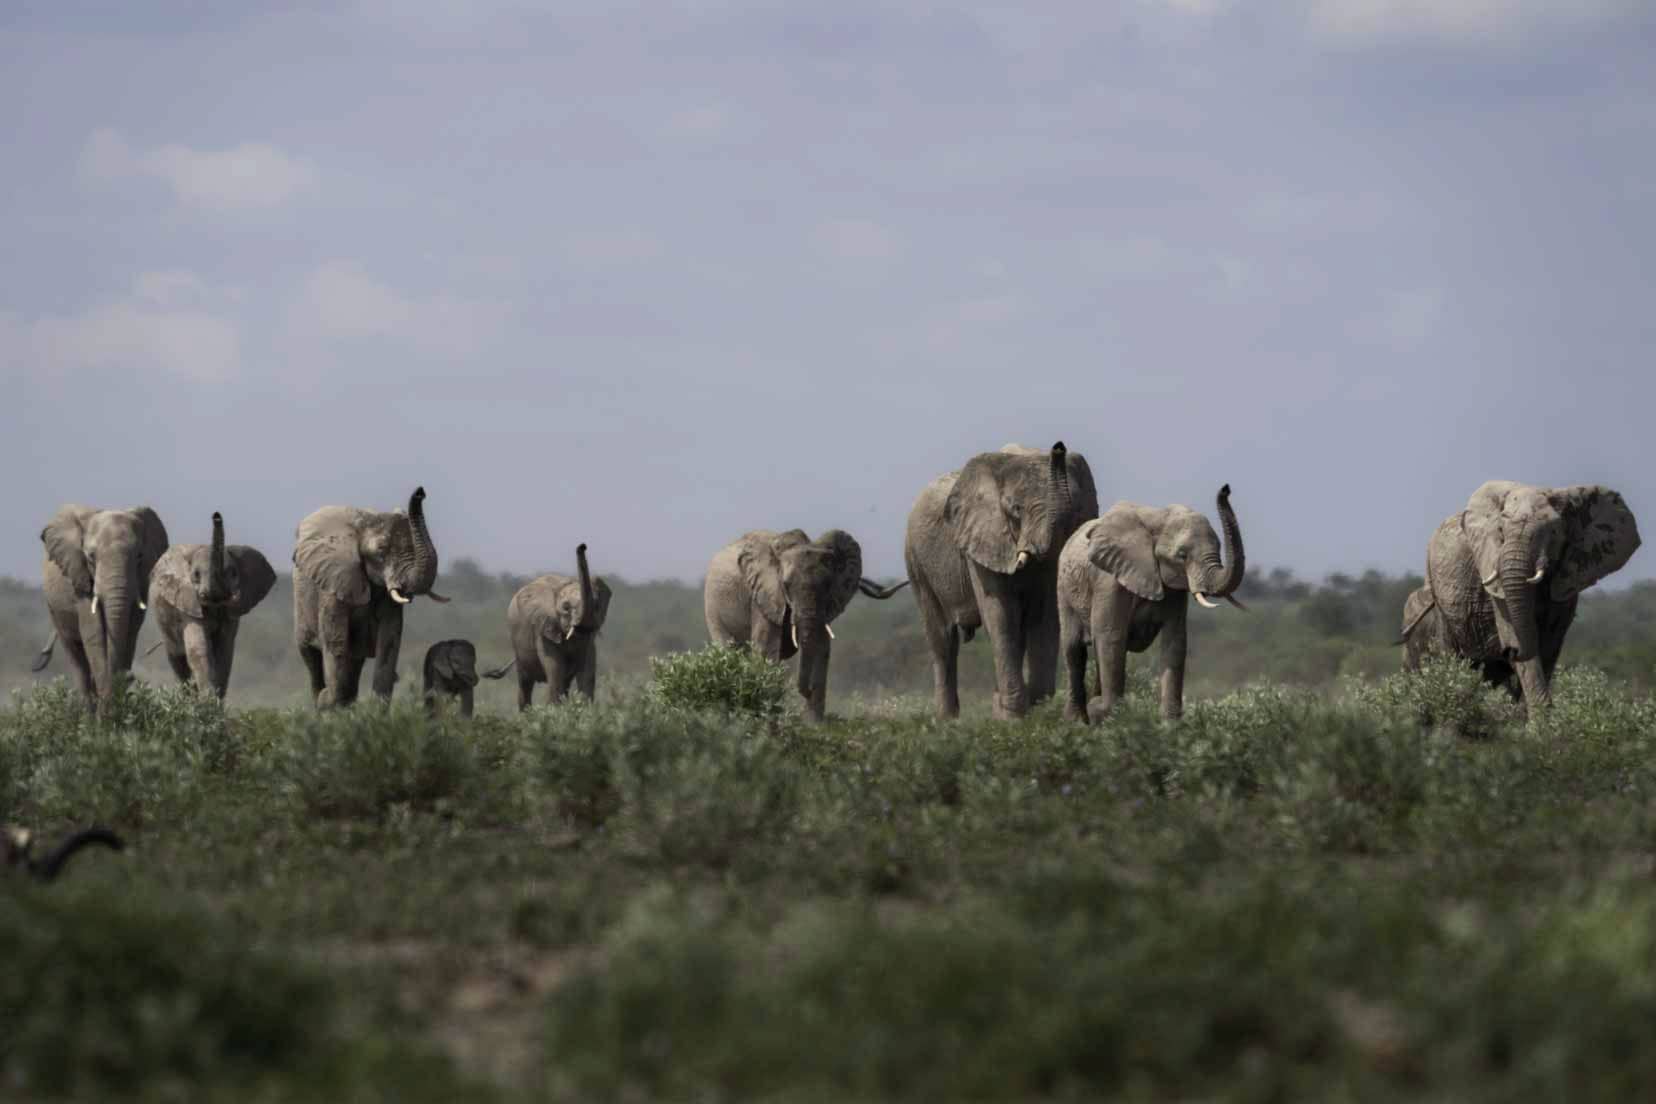 elephants with trunks up